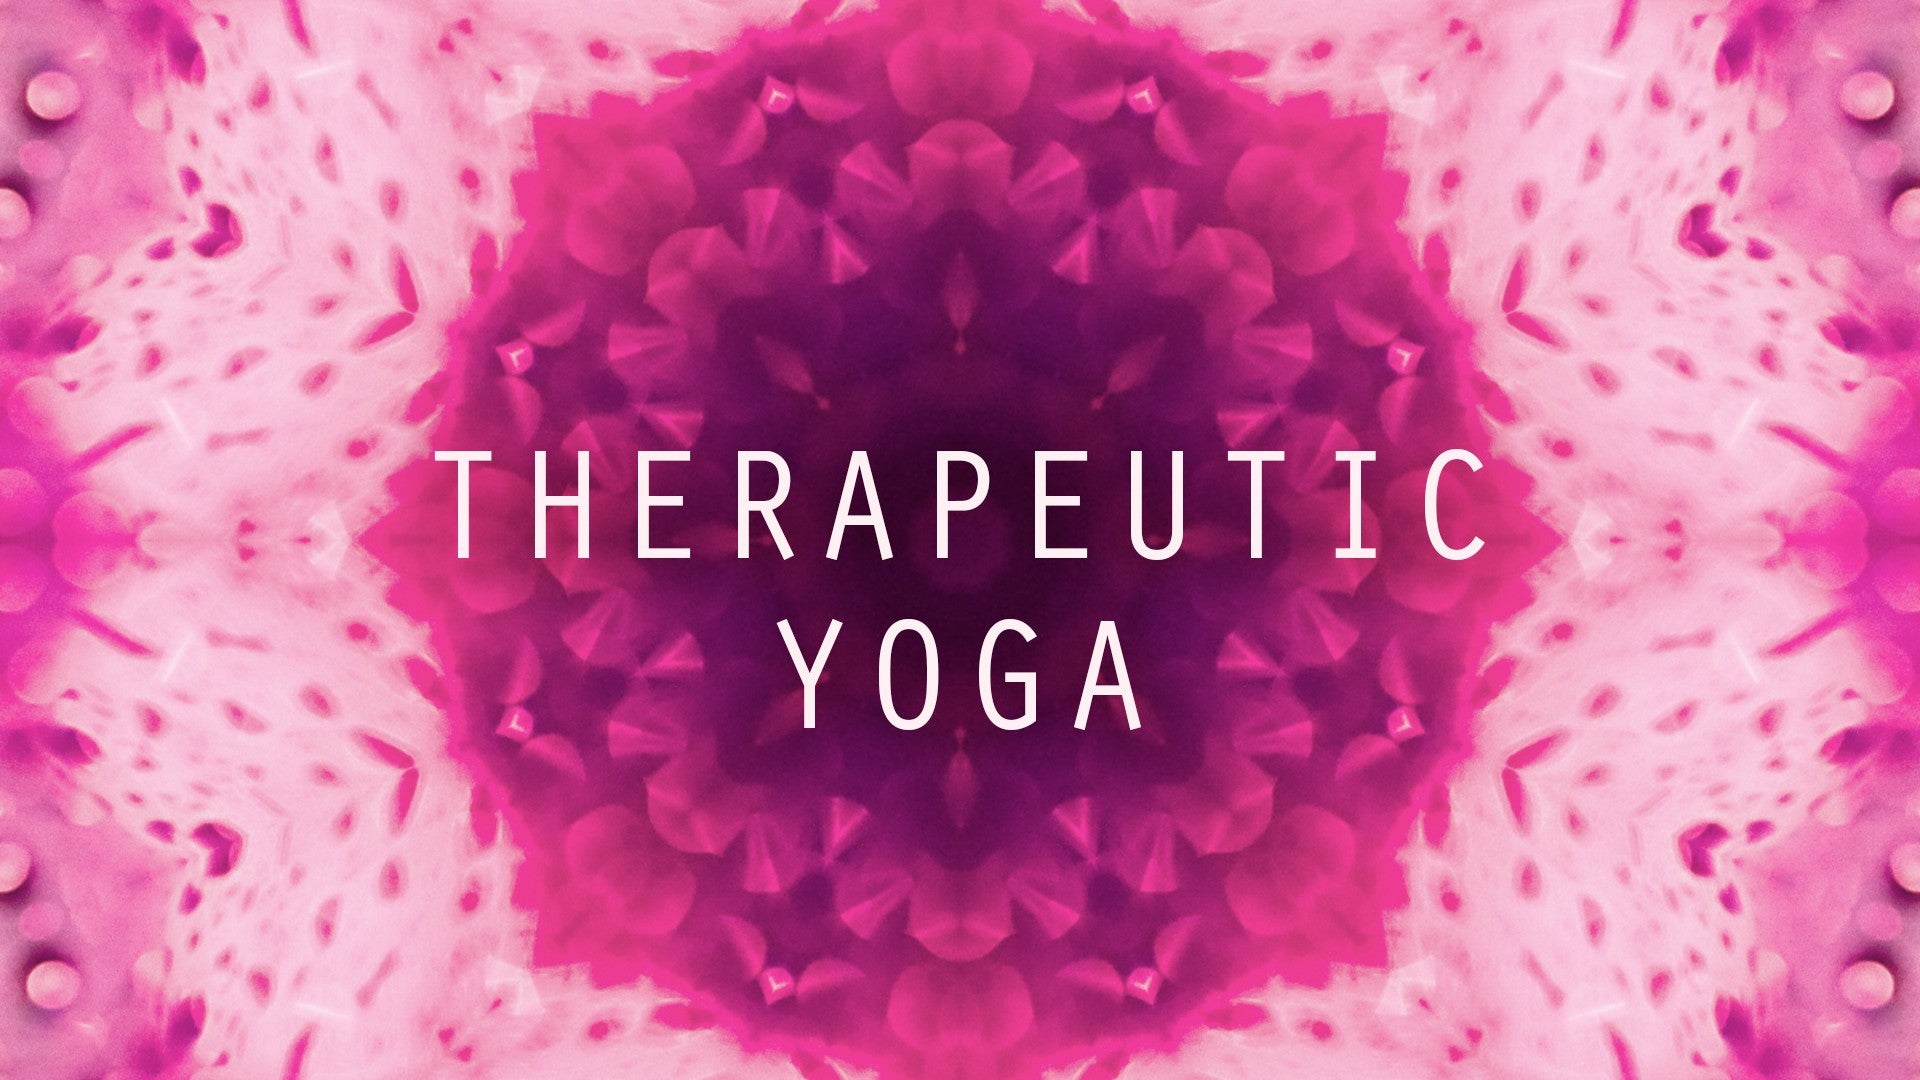 Therapeutic Yoga Artwork